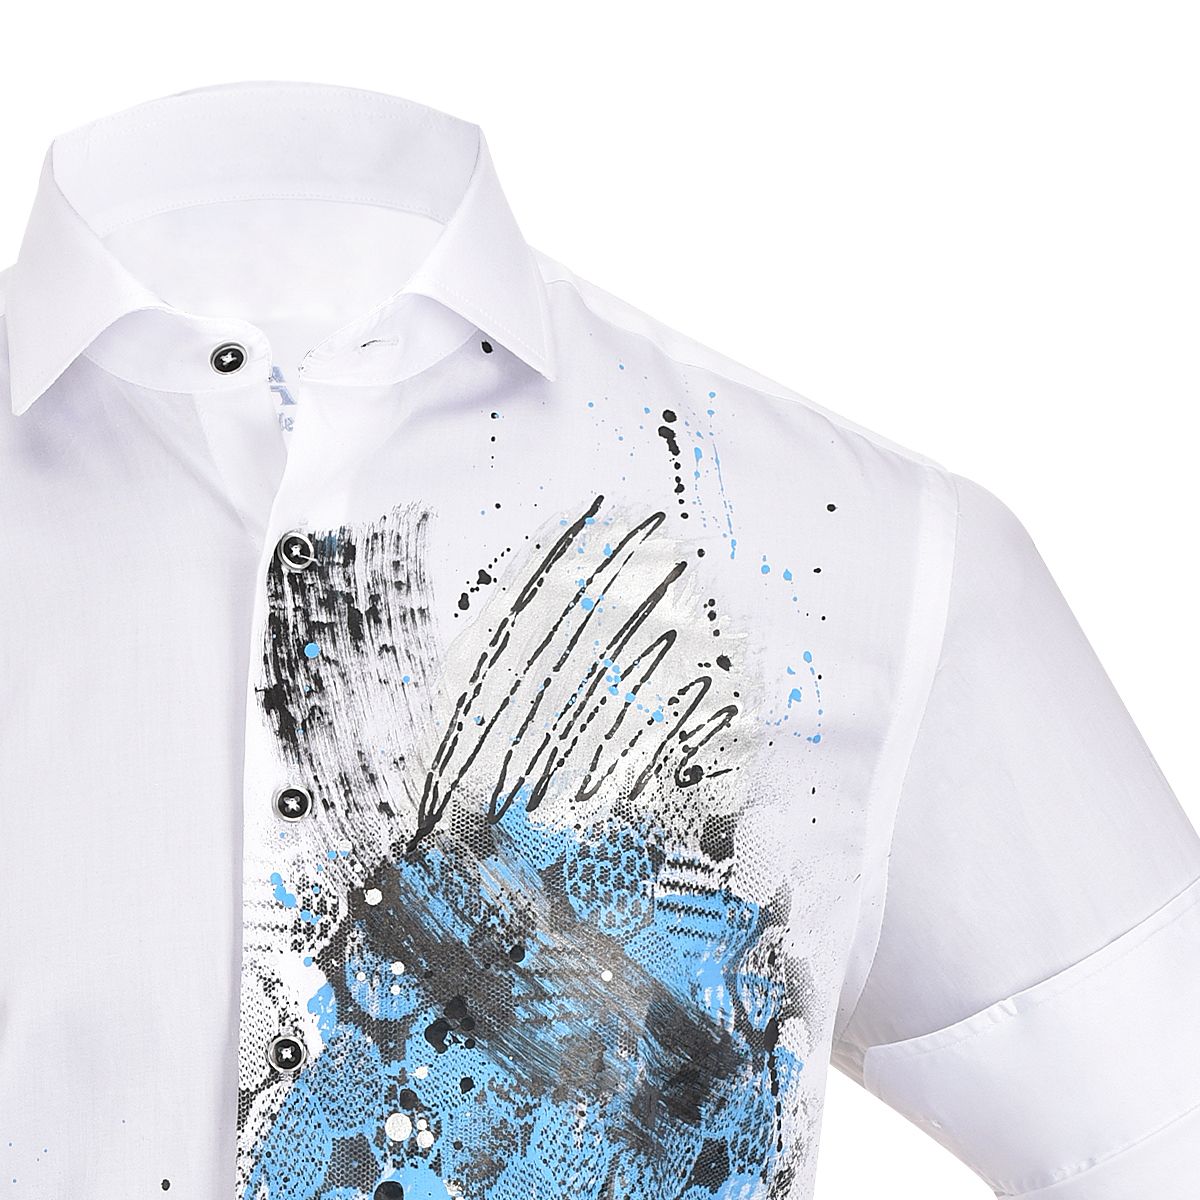 CM0W584 - Cuadra white casual fashion hand painted shirt for men-Kuet.us